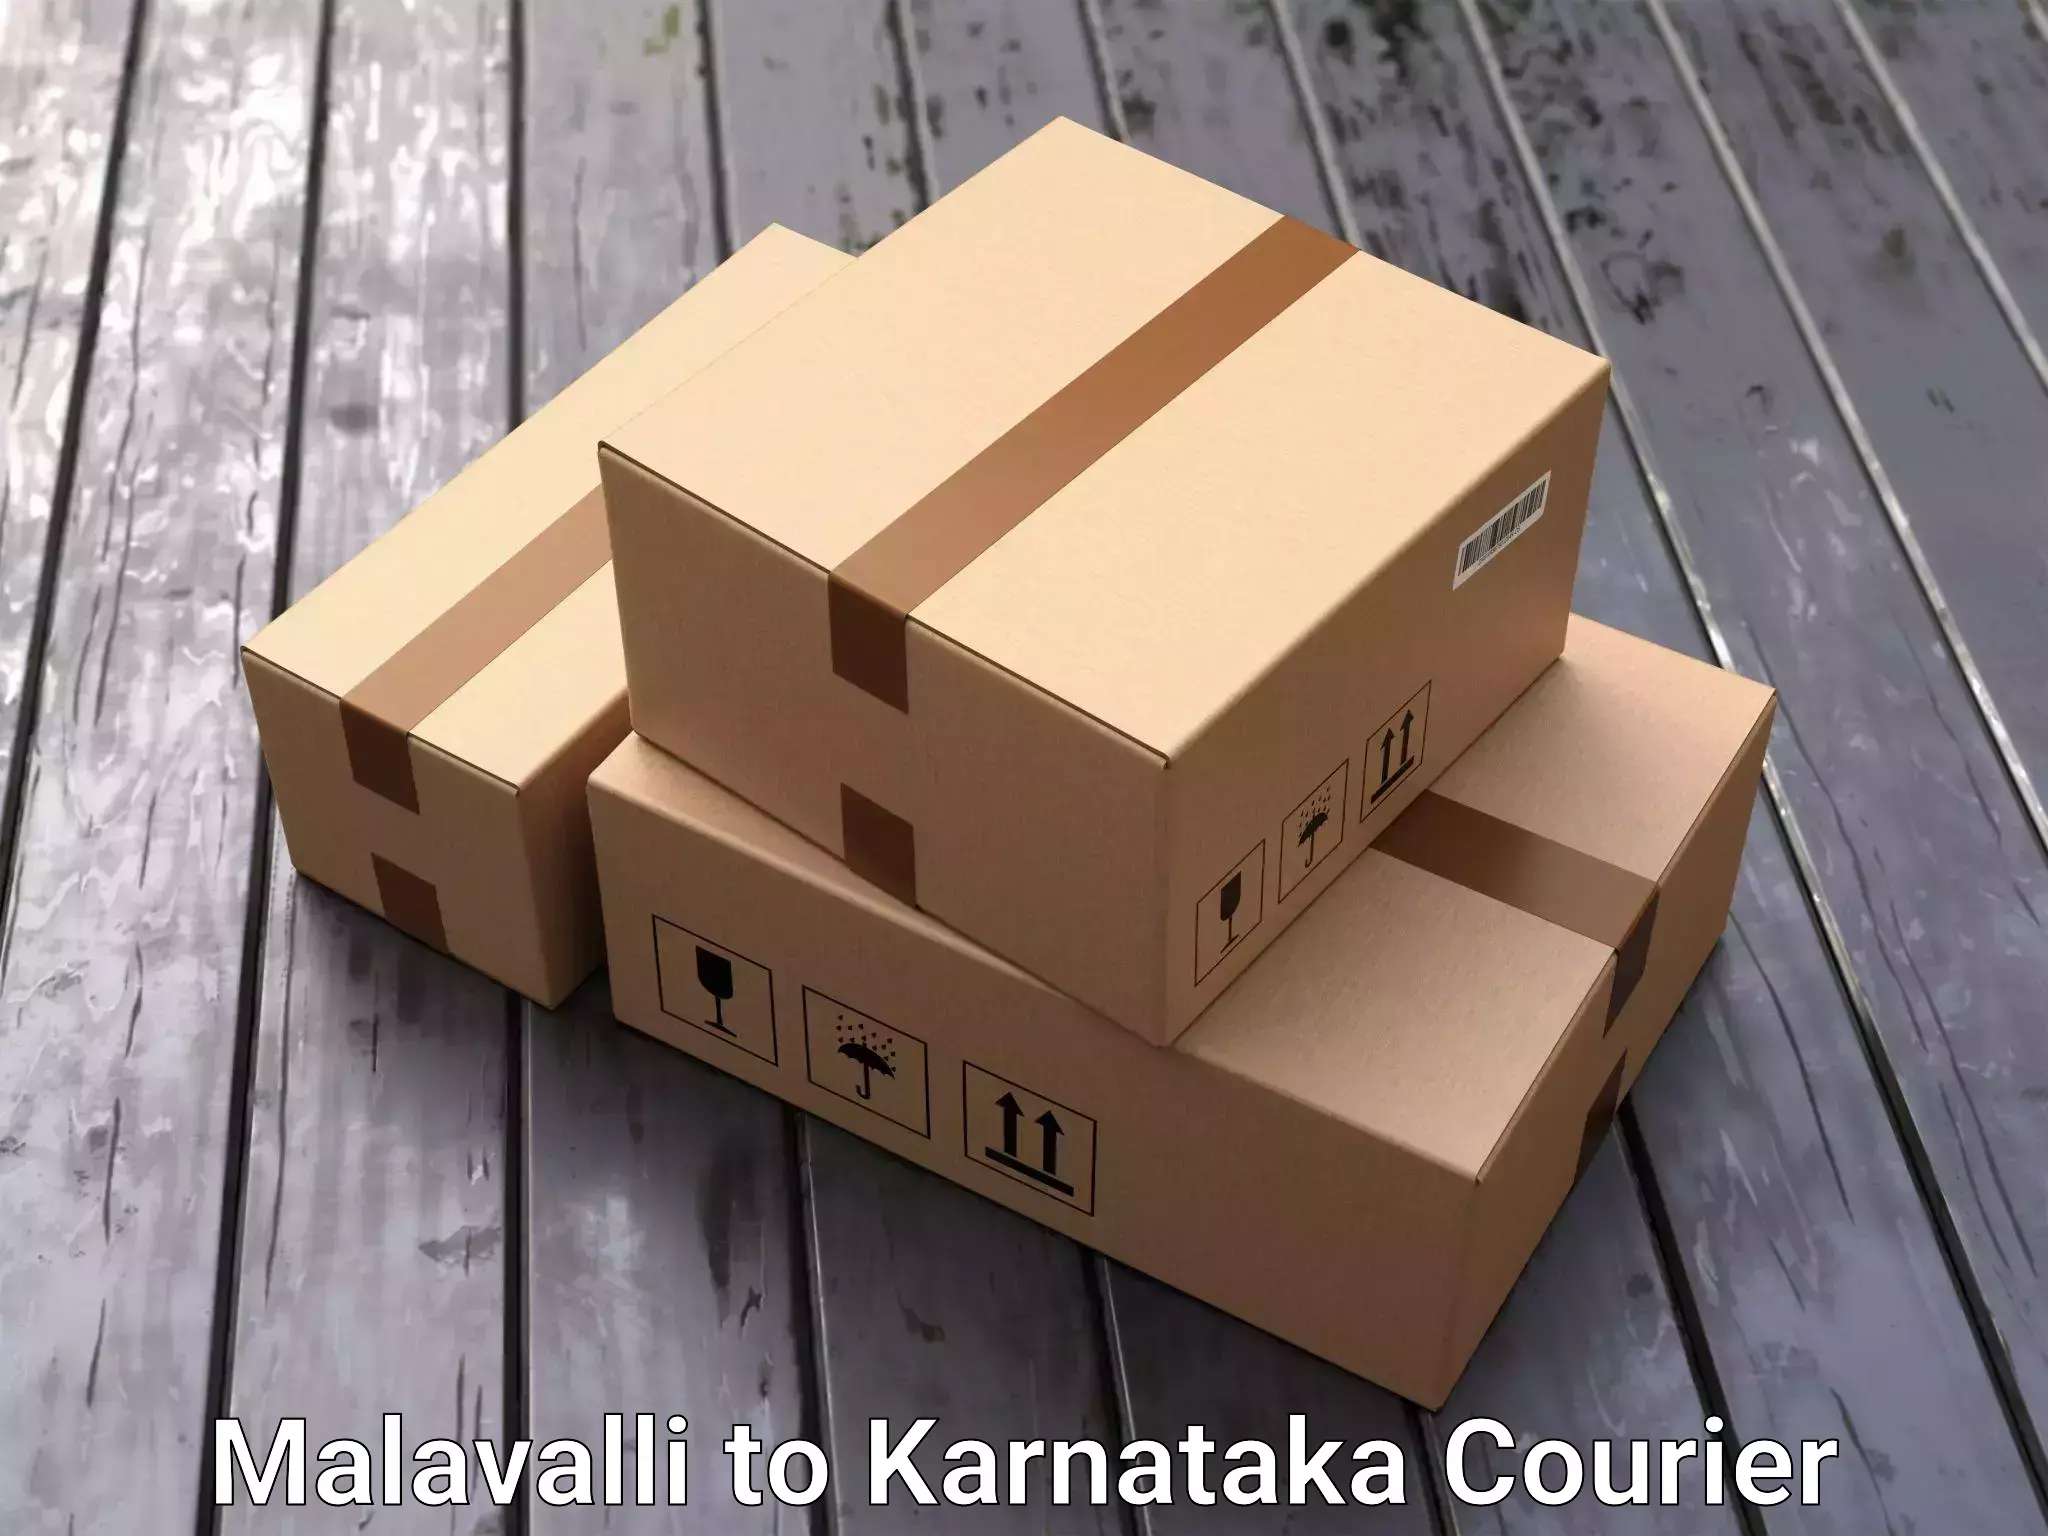 Furniture delivery service Malavalli to Muddebihal